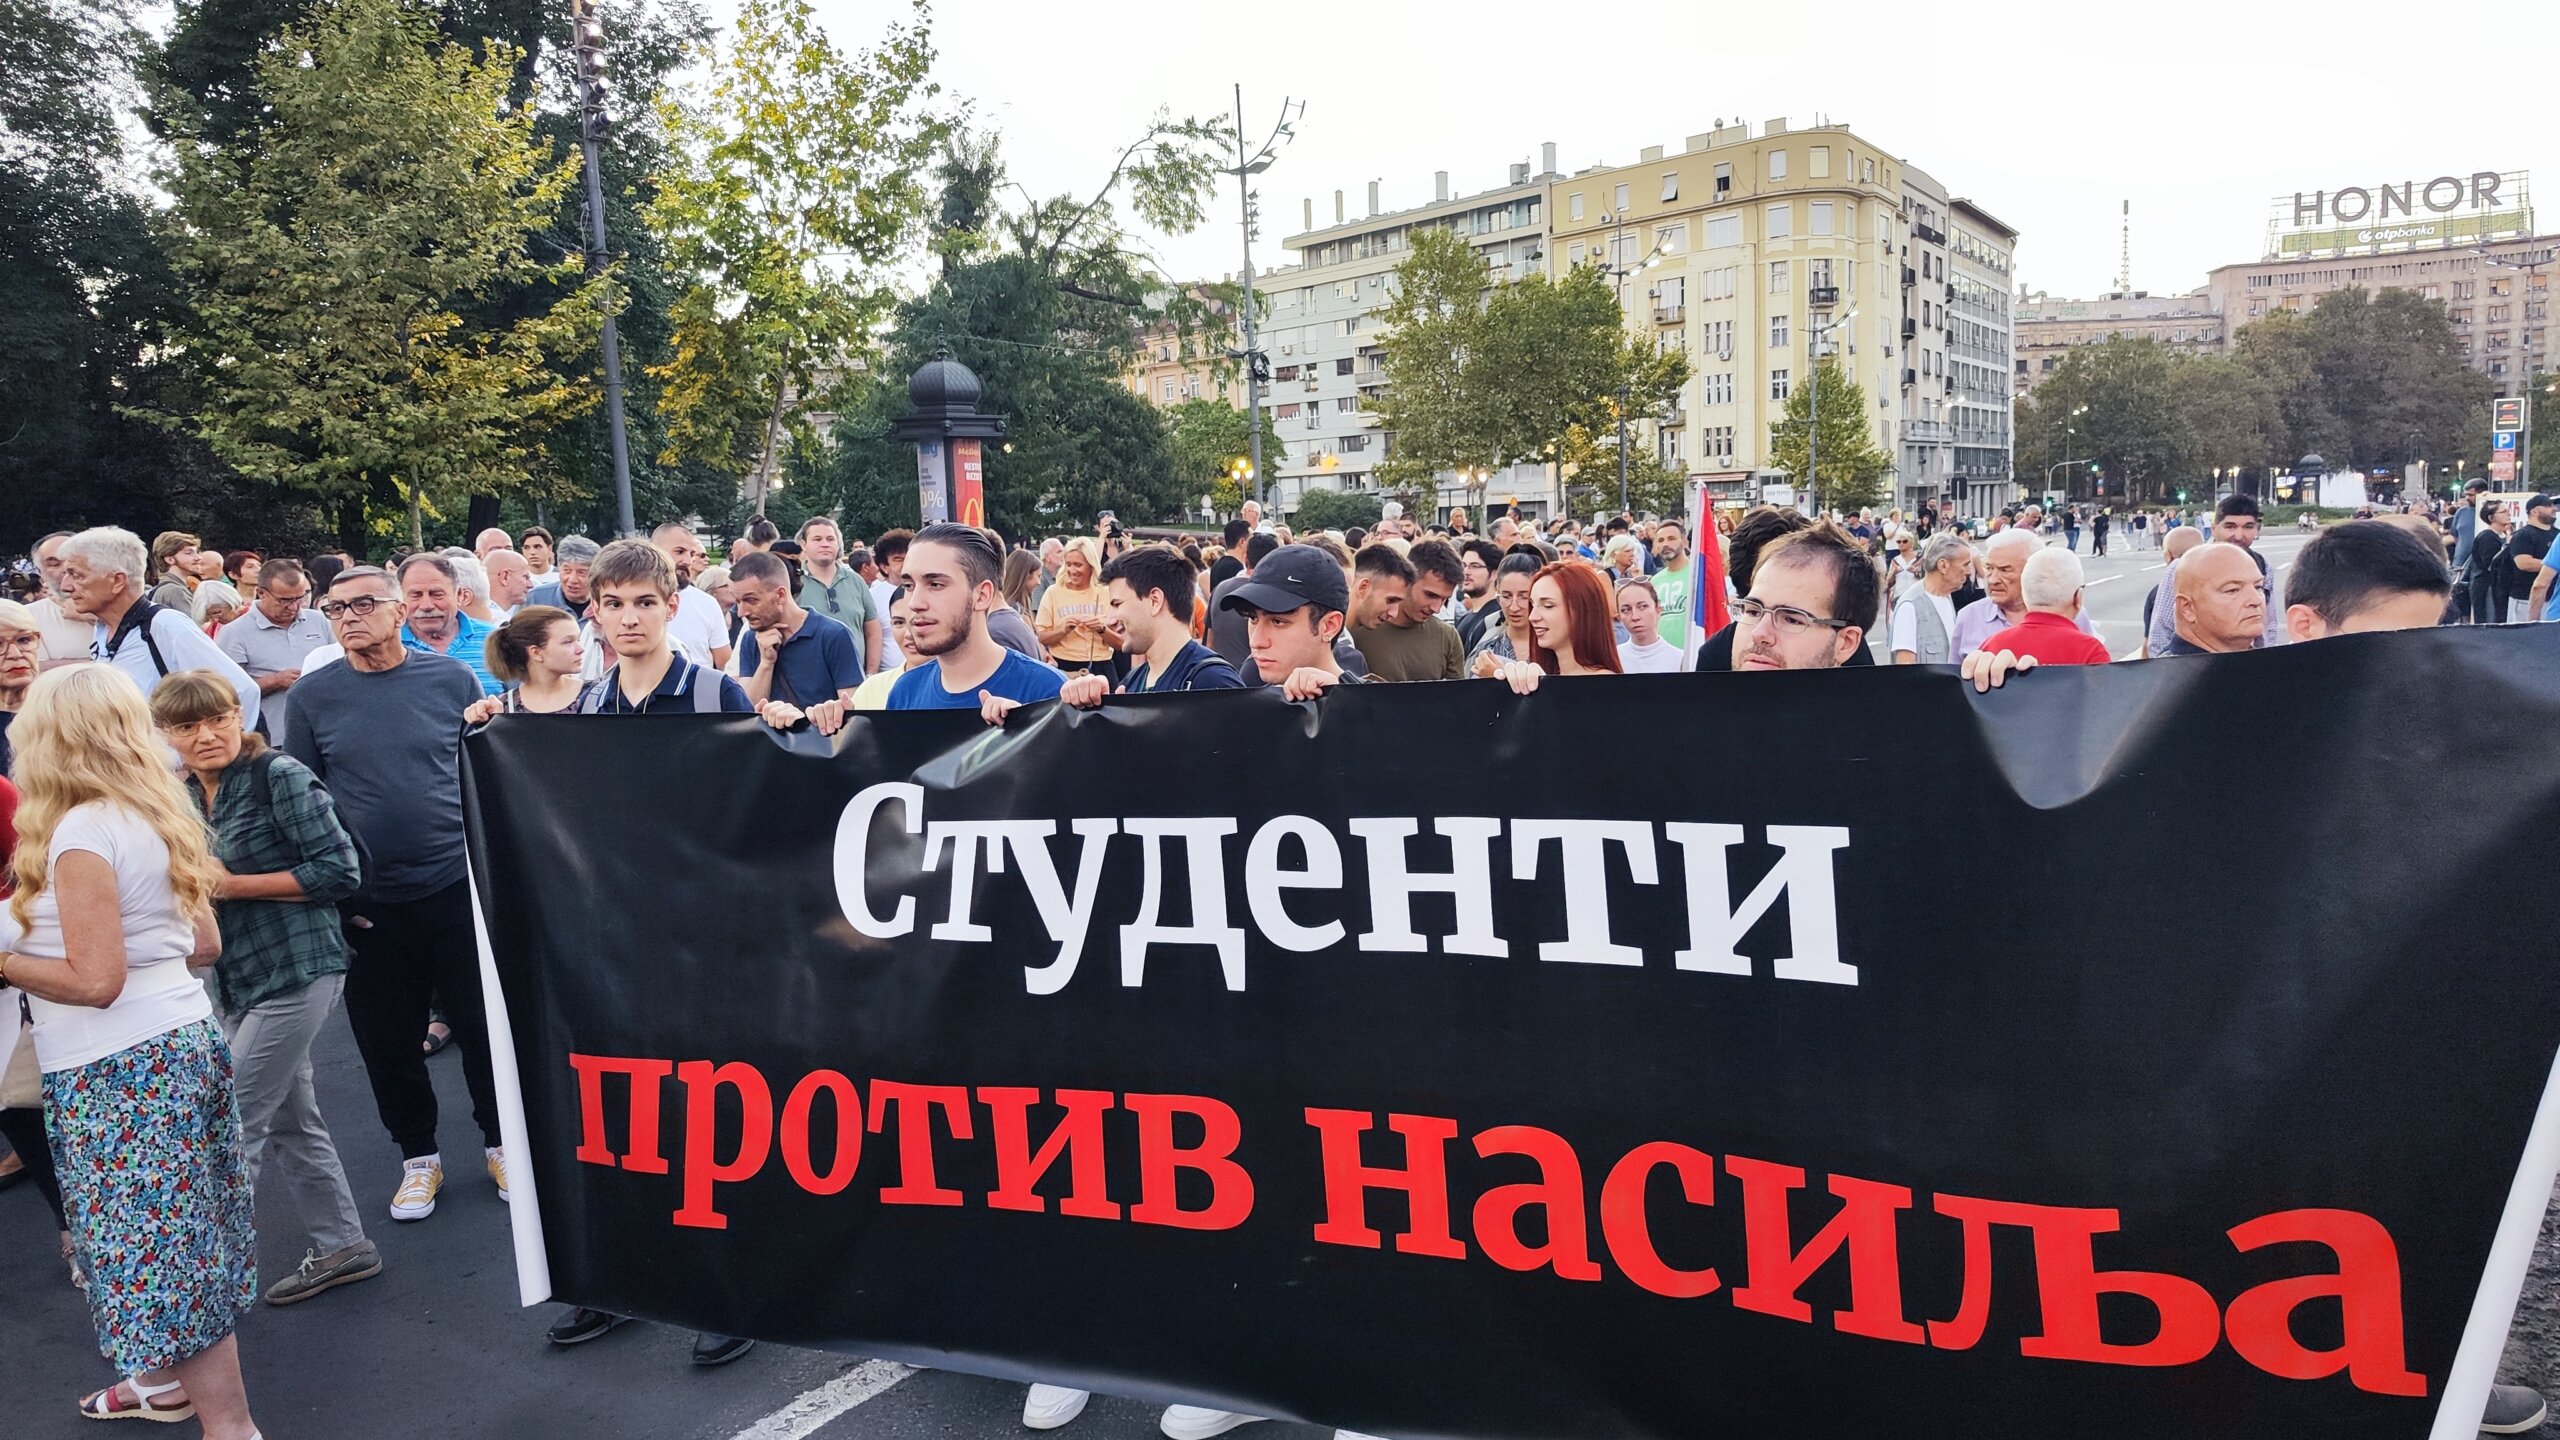 (VIDEO) U Beogradu održan 18. protest "Srbija protiv nasilja", građani se razišli 2